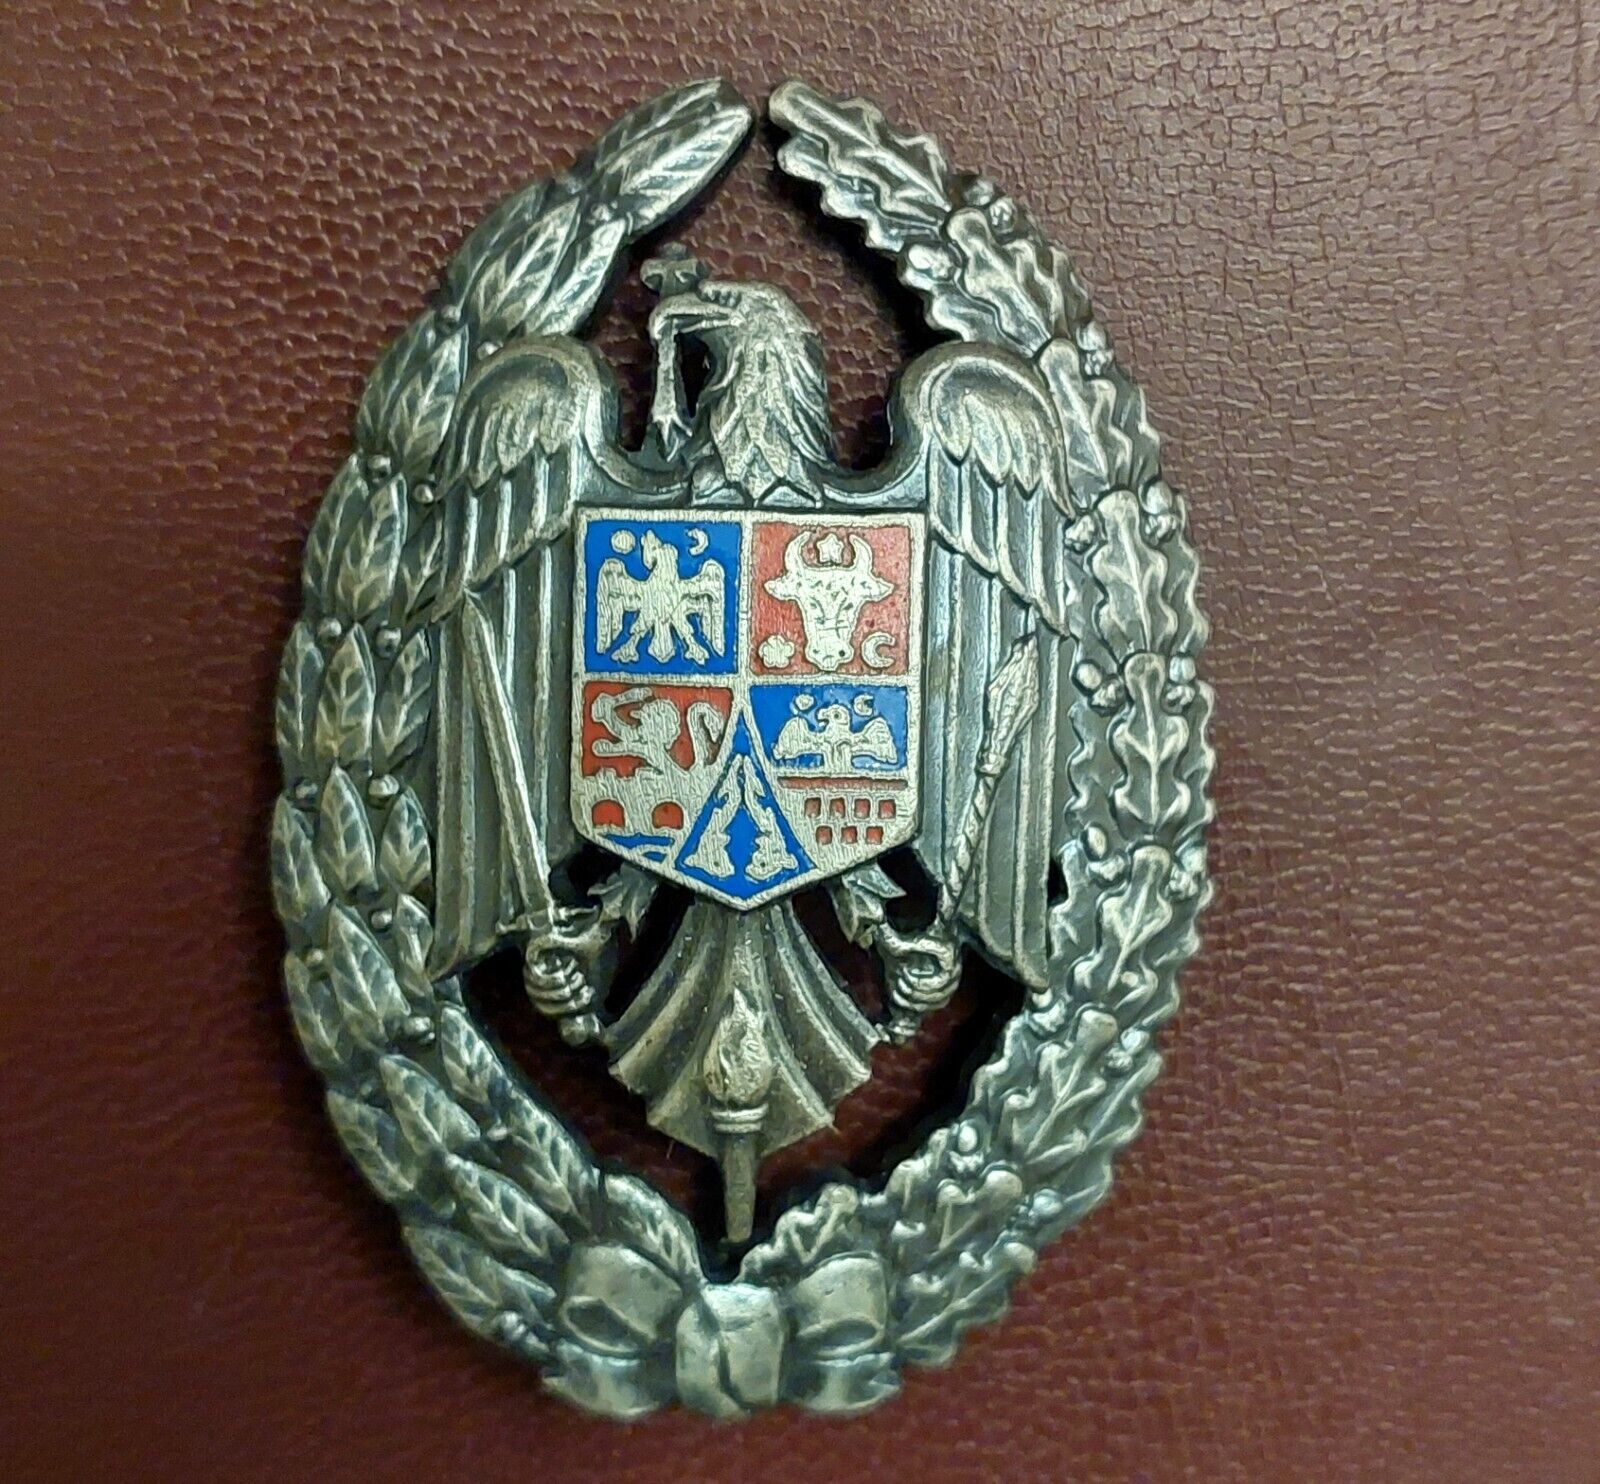 Romania Military Academy officer badge